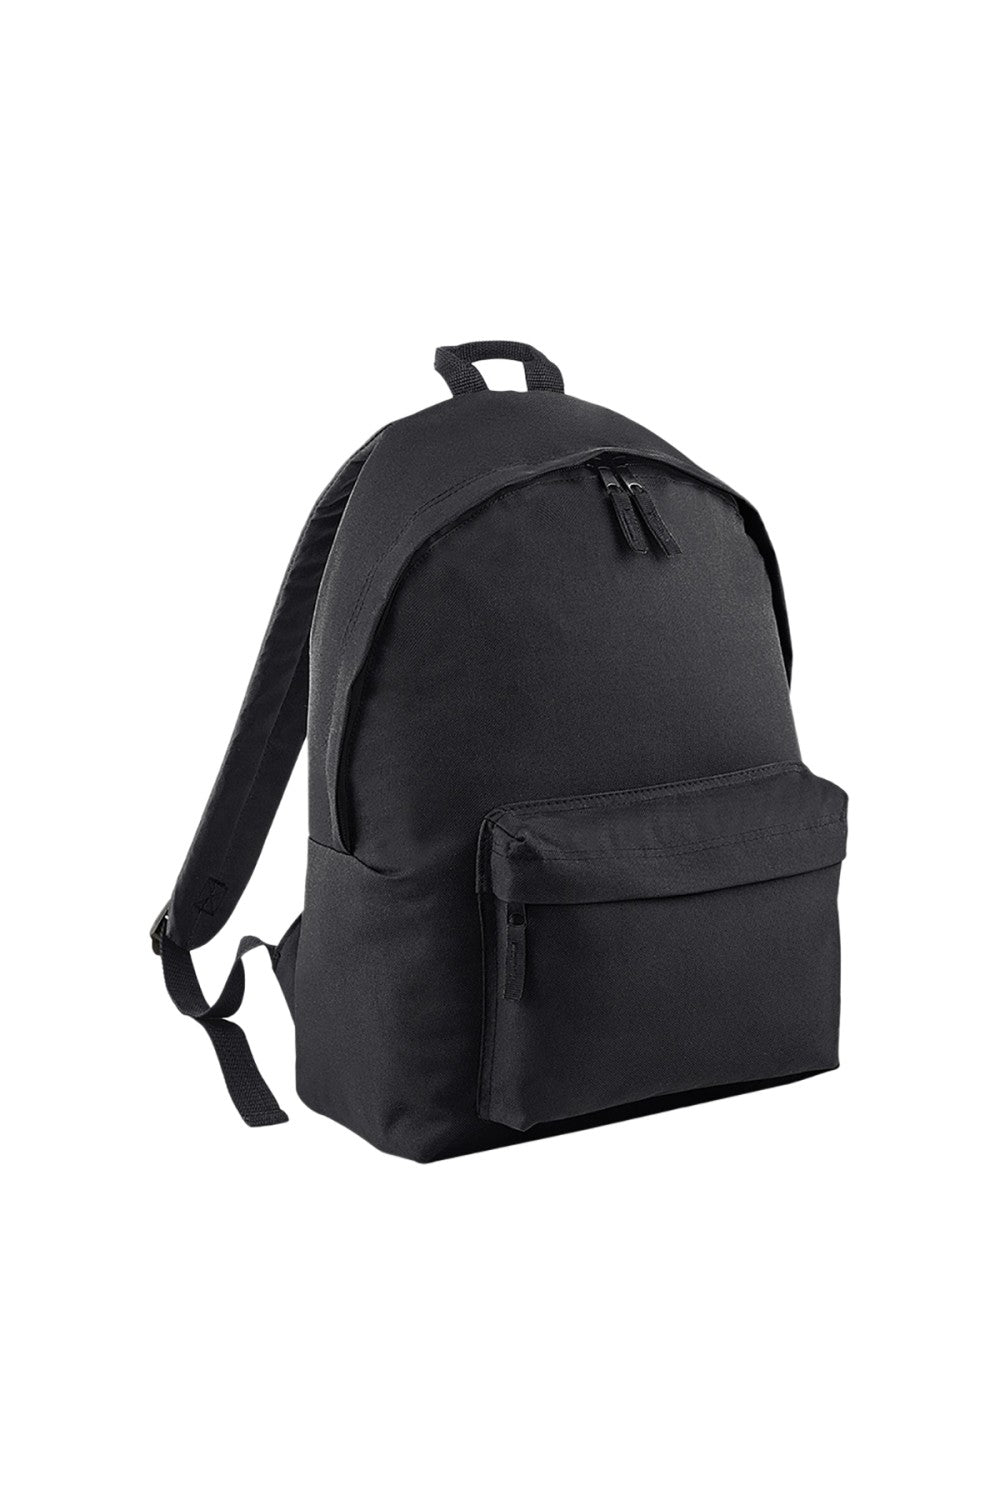 Fashion Backpack / Rucksack (18 Liters) (Black/Black)